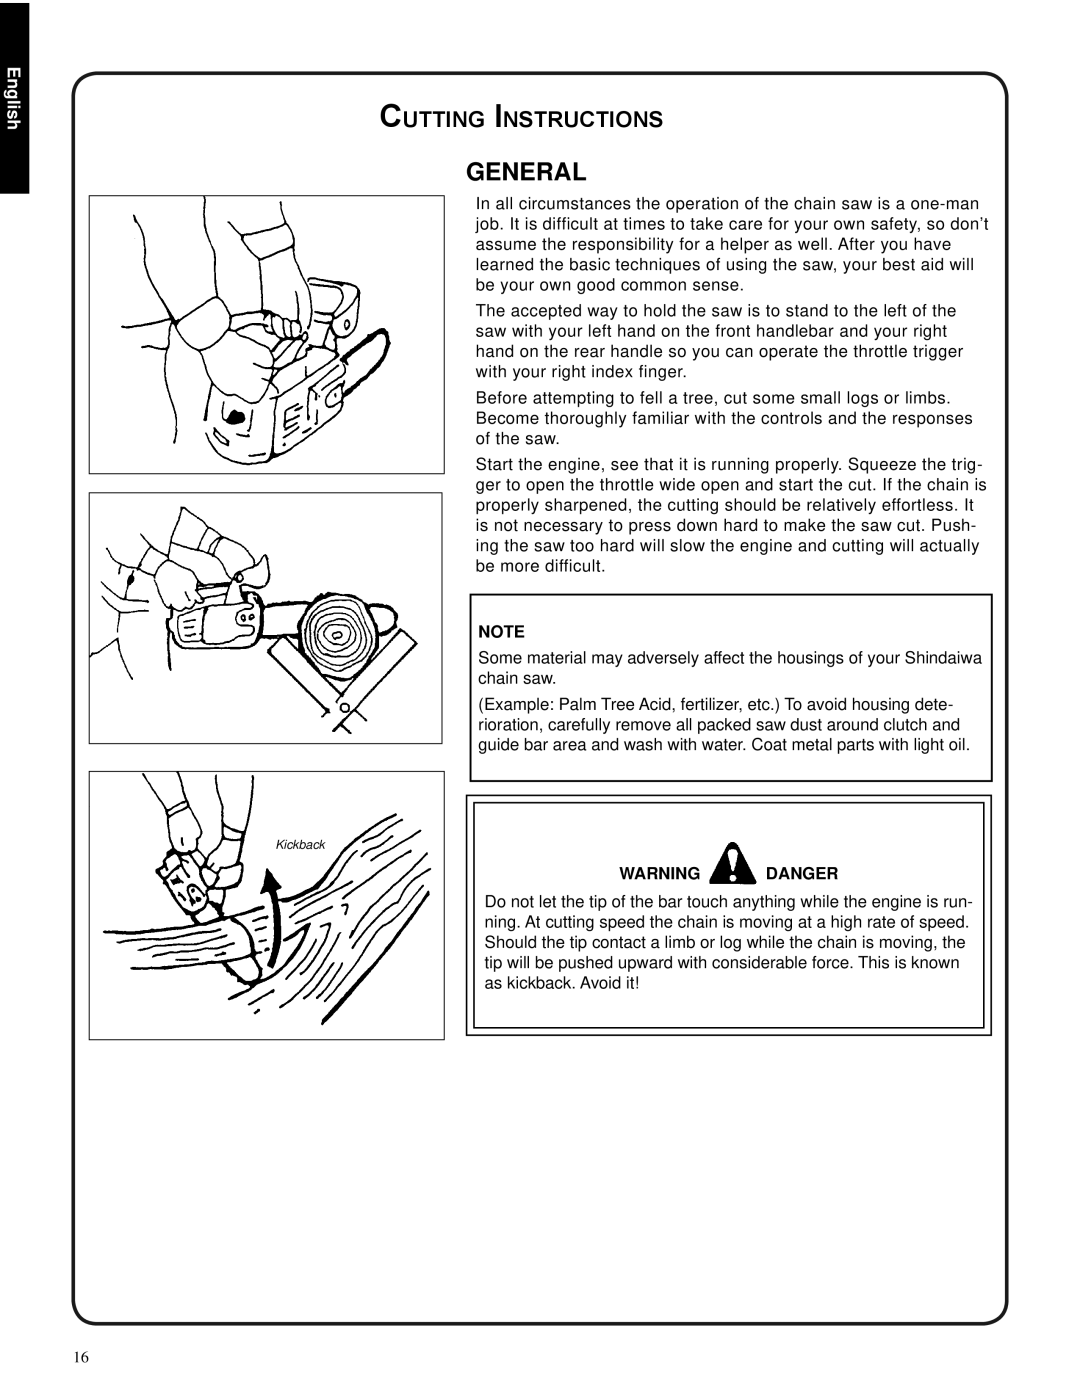 Shindaiwa 82085, 326T manual General, Cutting Instructions, English, Warning Danger 